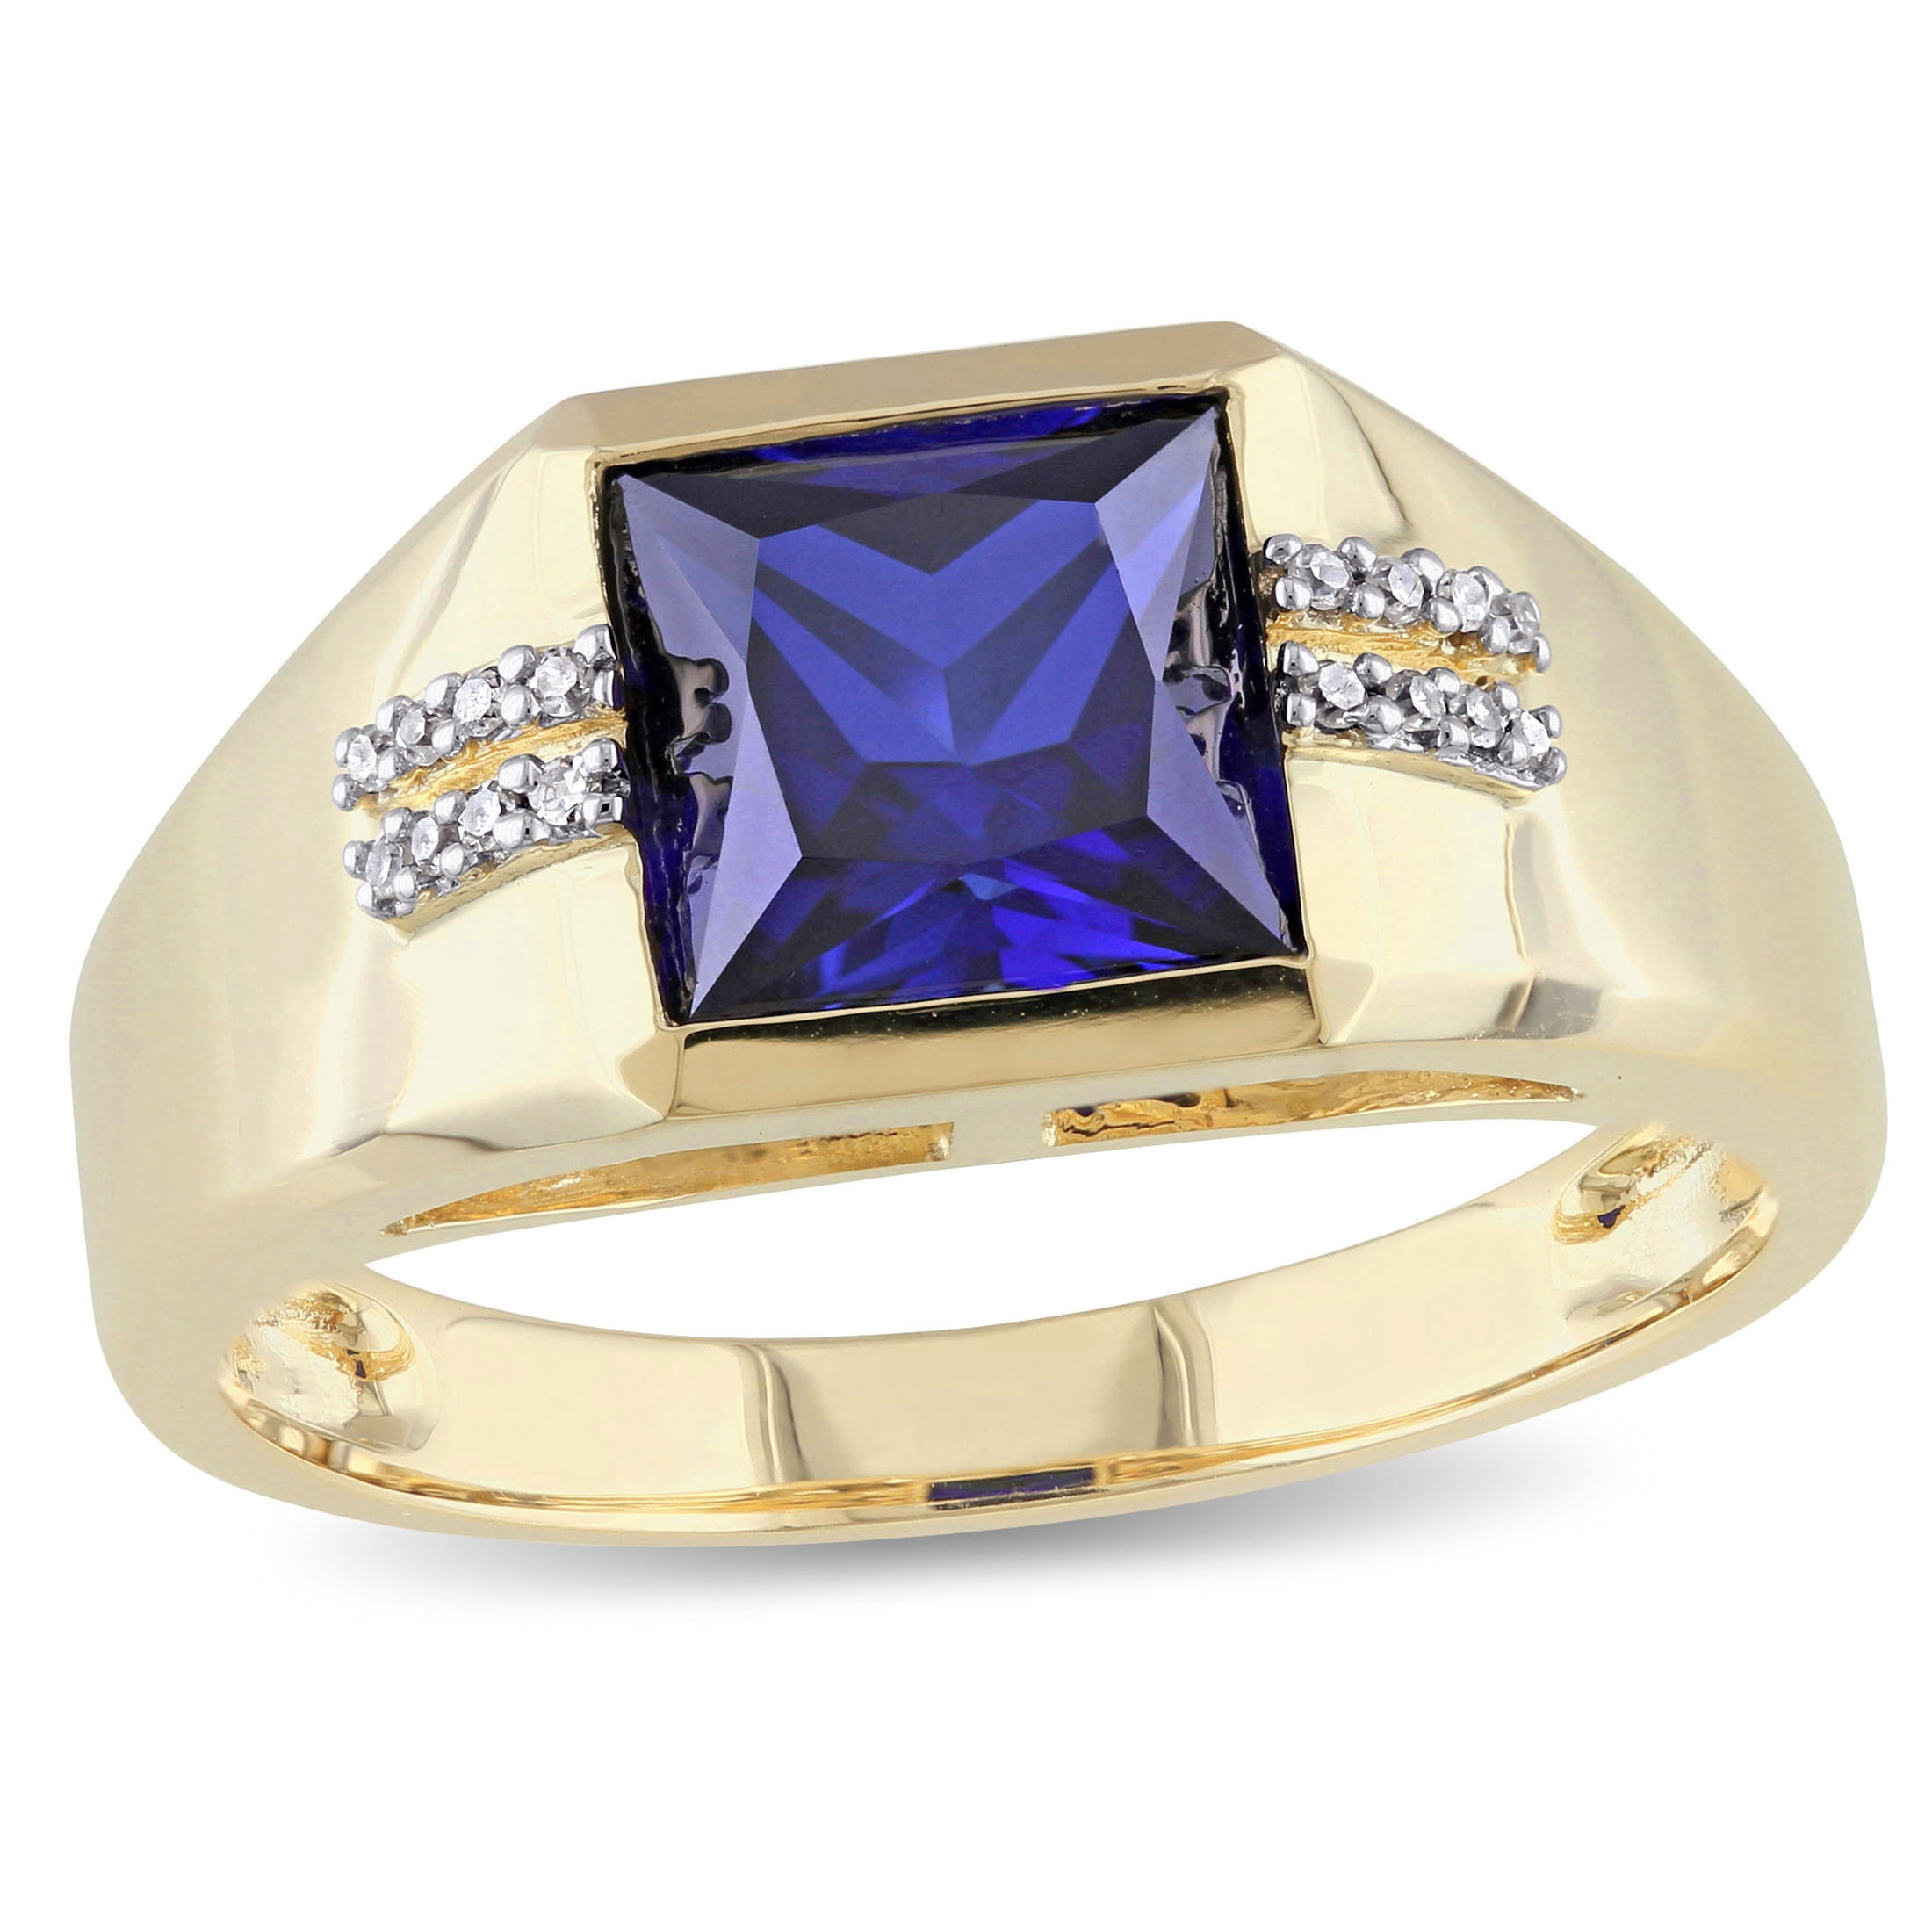 Miabella Men s 3 06 Carat T G W Square Cut Created Blue Sapphire and Diamond Accent 10kt Yellow Gold Classic Ring 1bf96524 7f05 4a95 a61b aa68f163f2d2.51ef34fd318dd52887bb5274ed721397